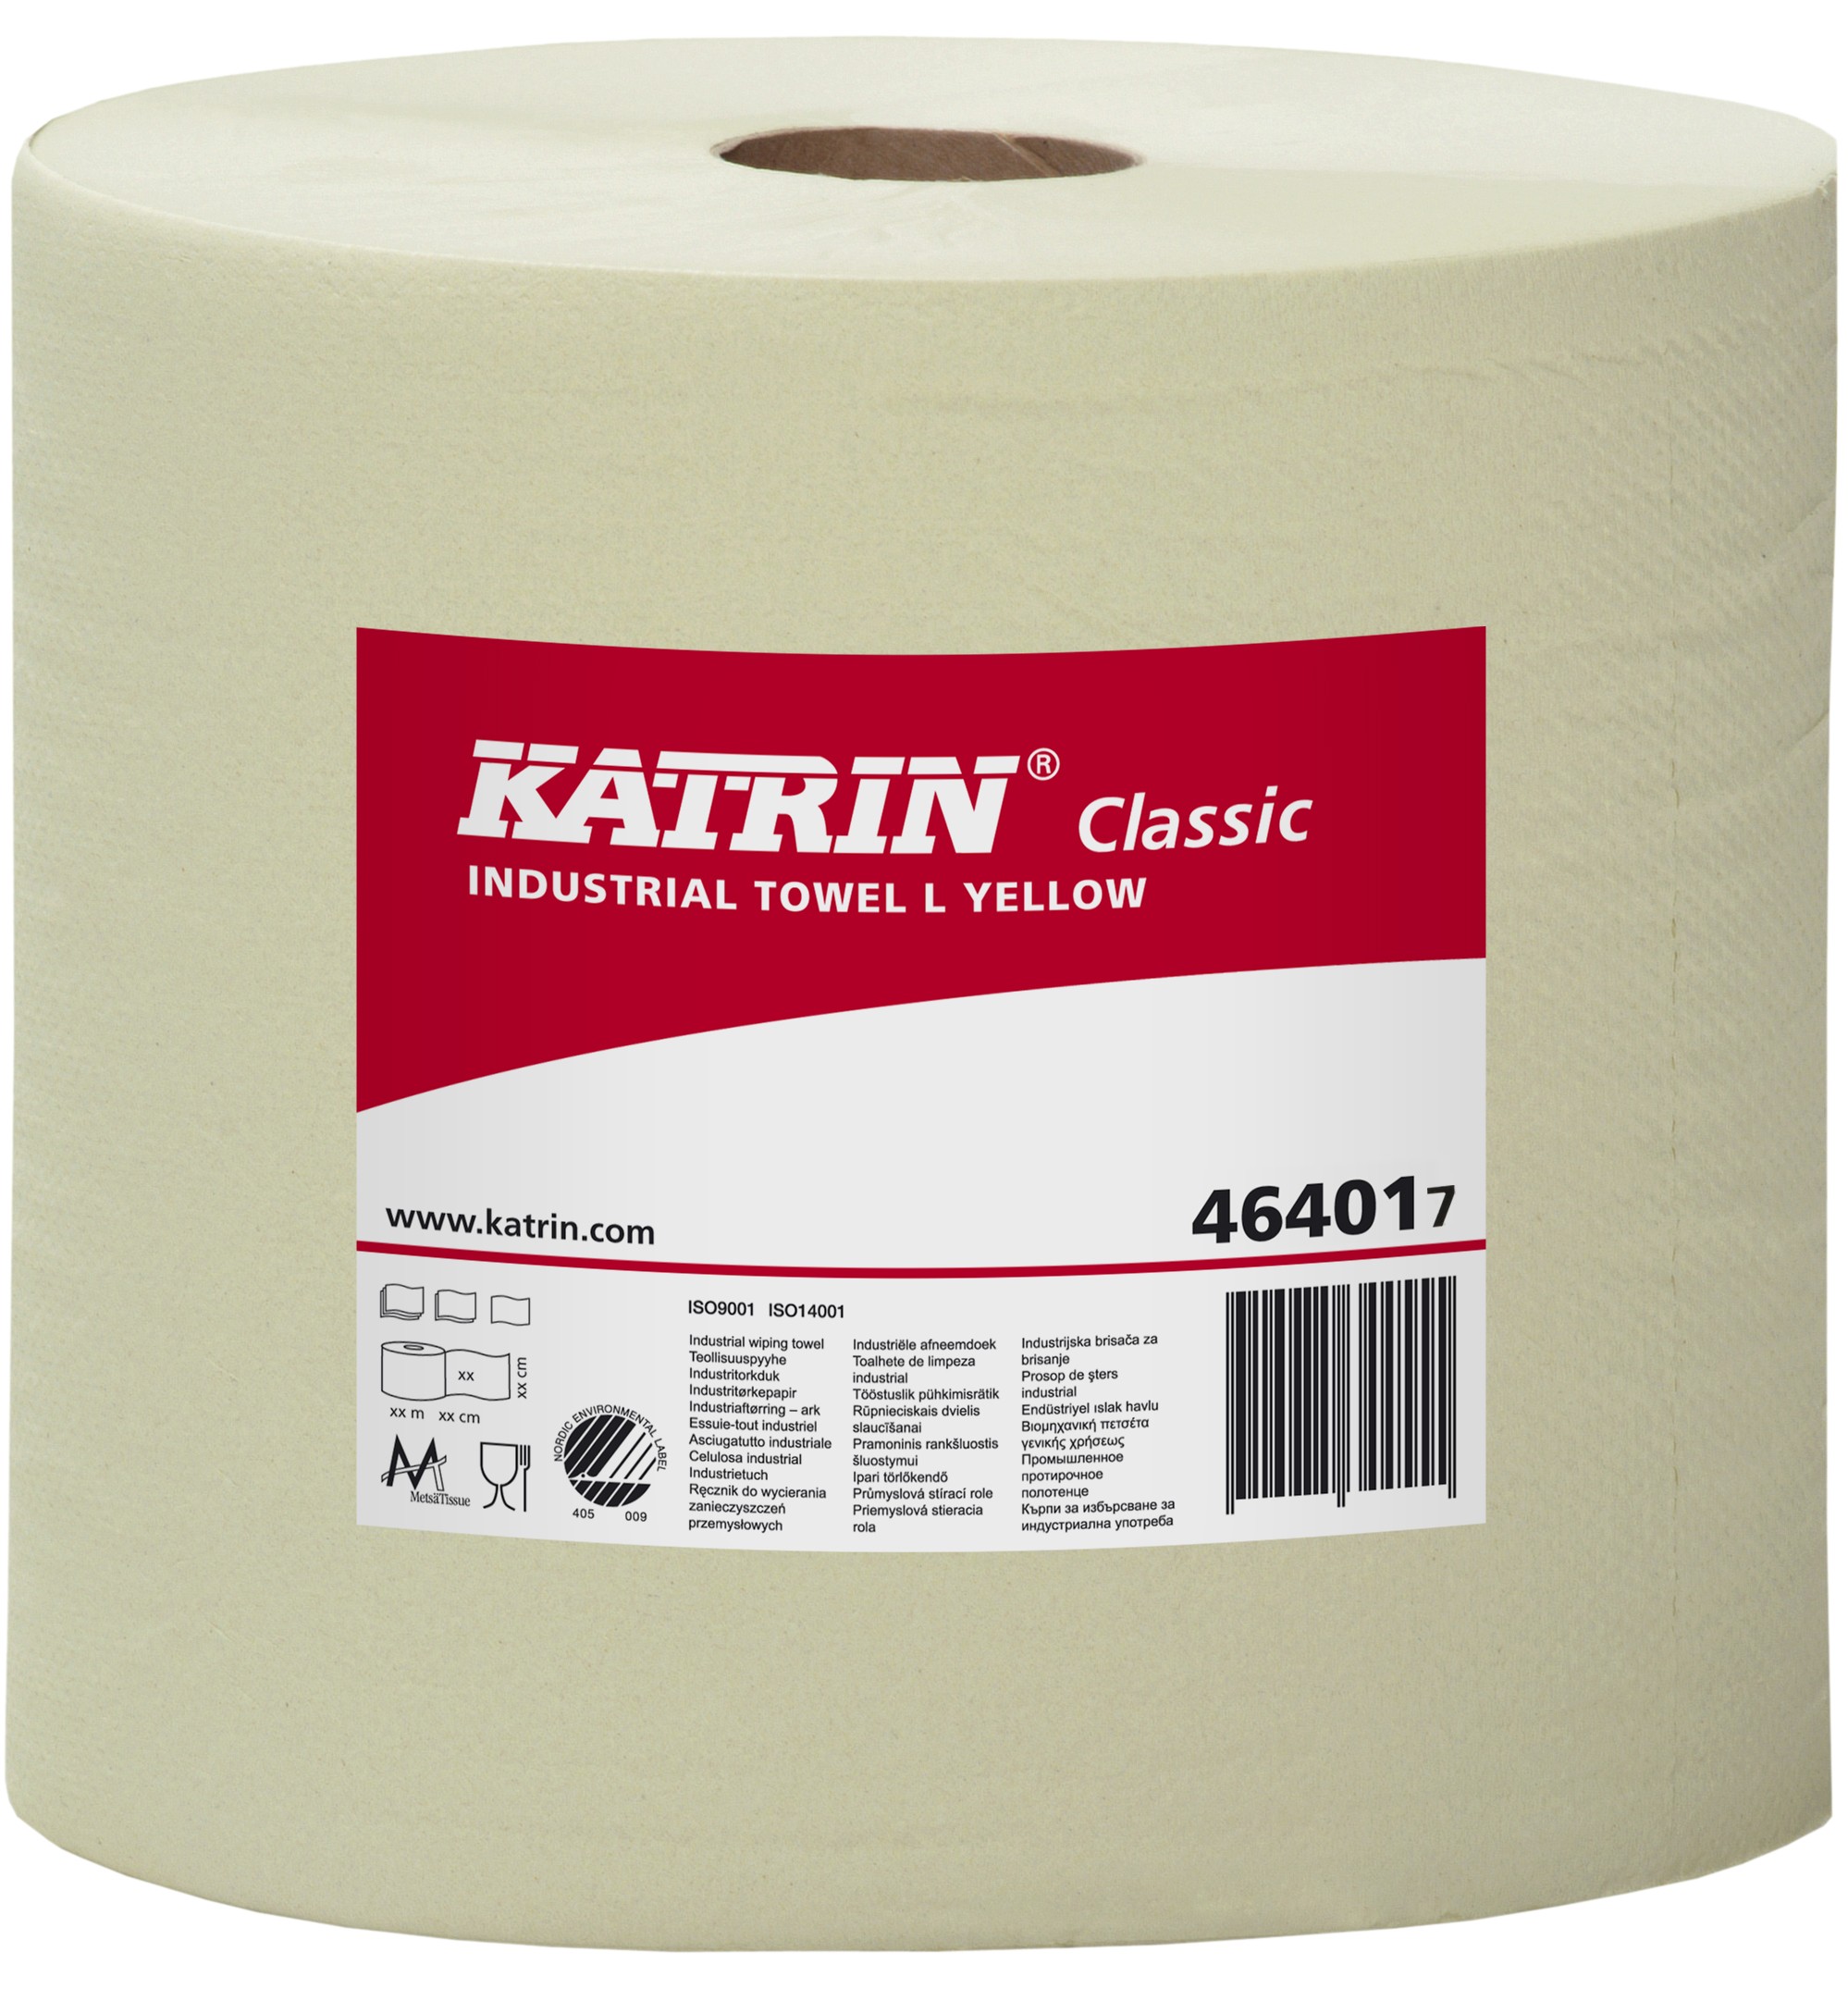 Katrin Classic Industrial Towel L Yellow